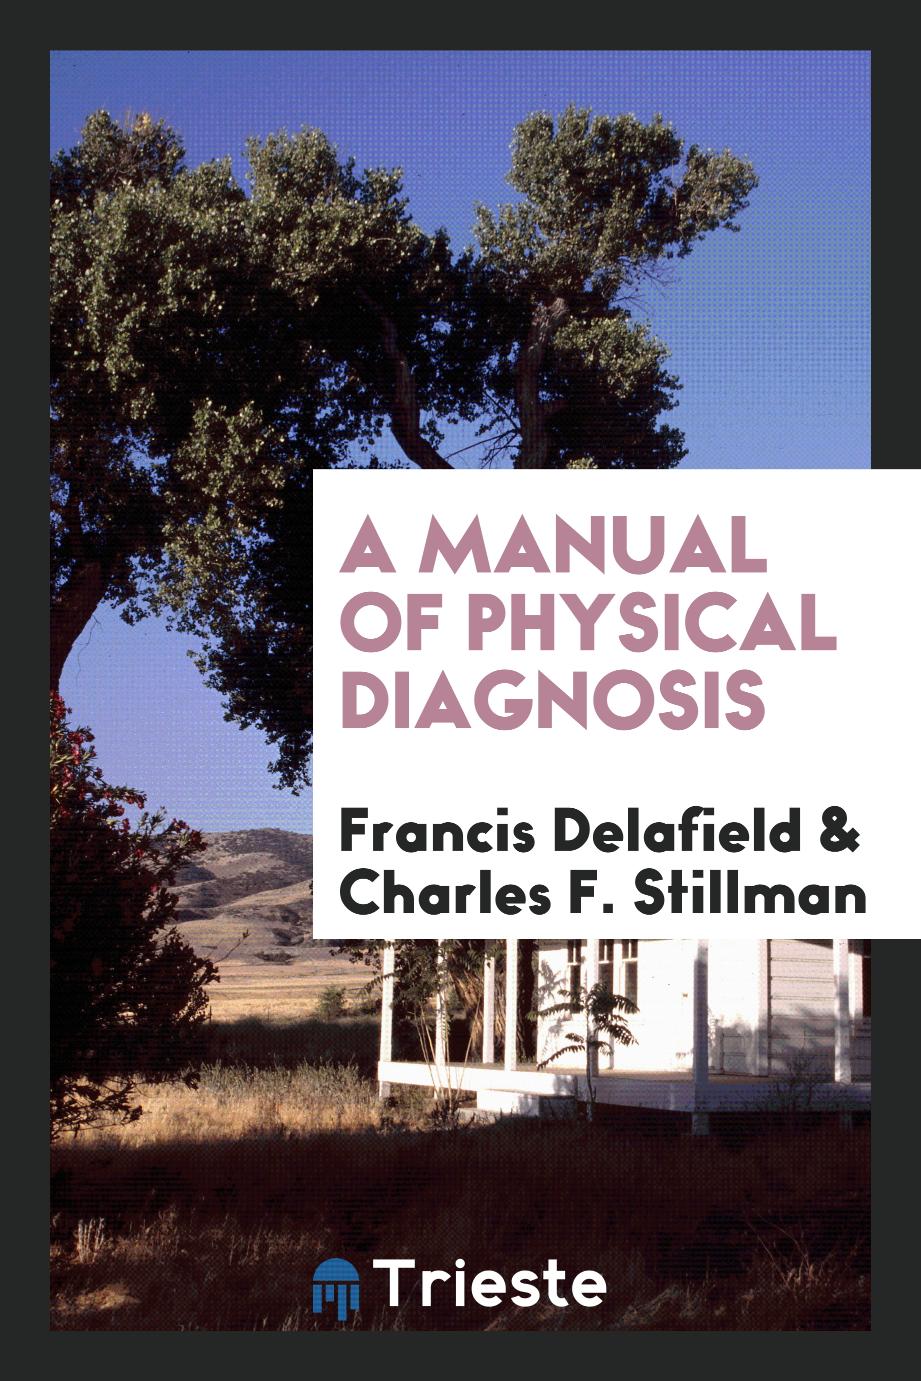 A Manual of physical diagnosis